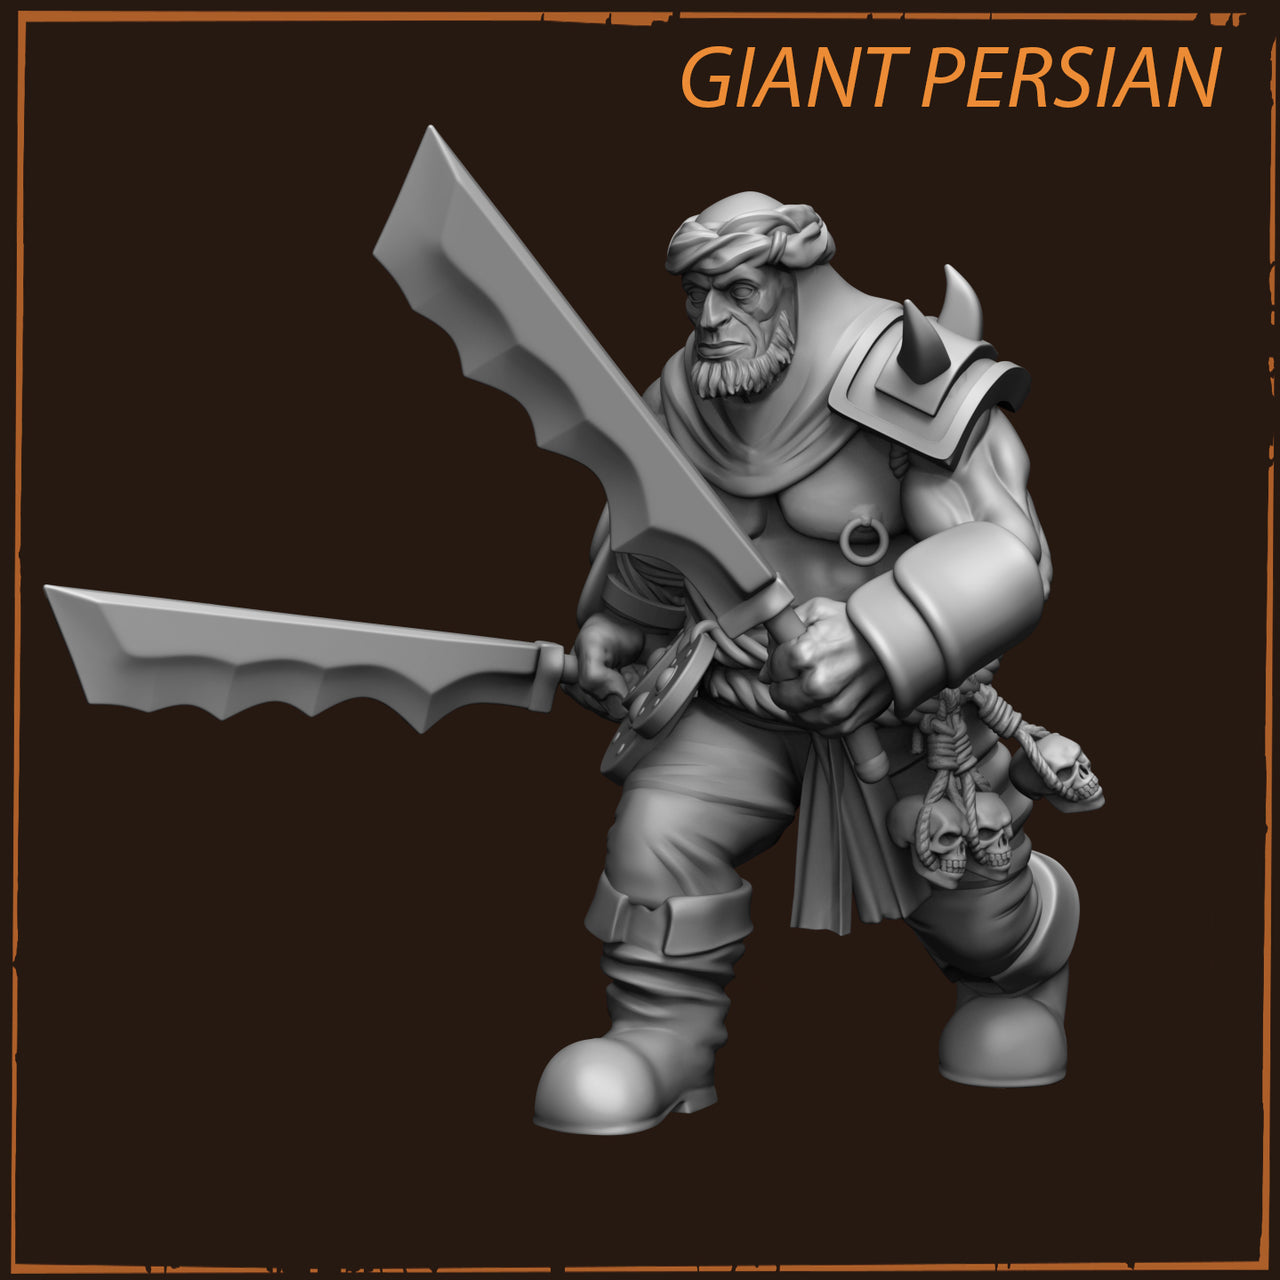 Giant Persian